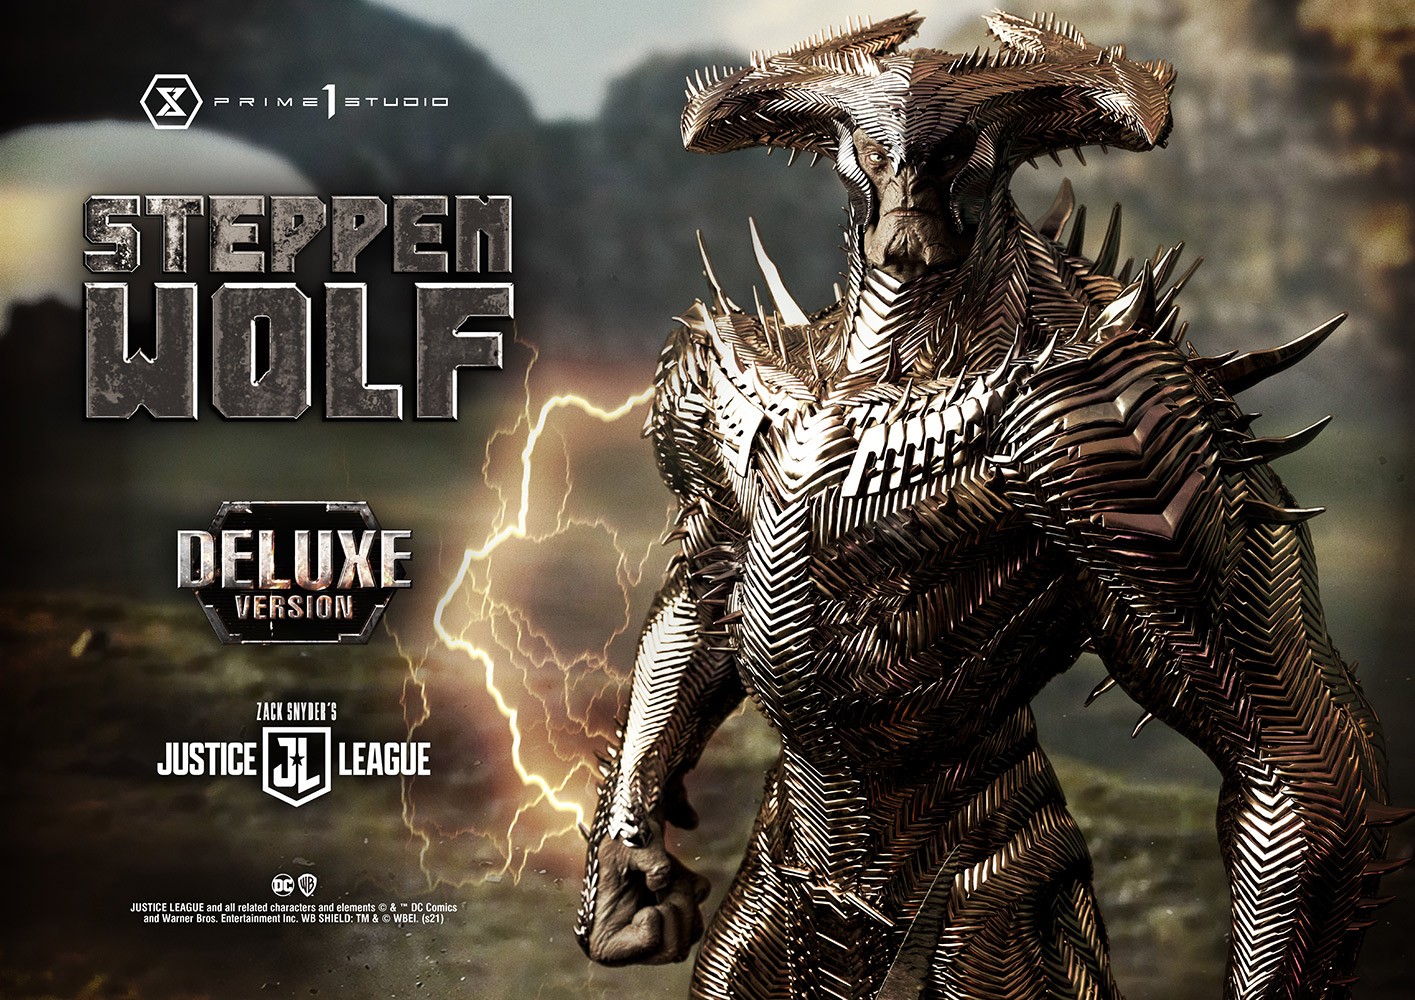 Steppenwolf (Deluxe Version) (Prototype Shown) View 1